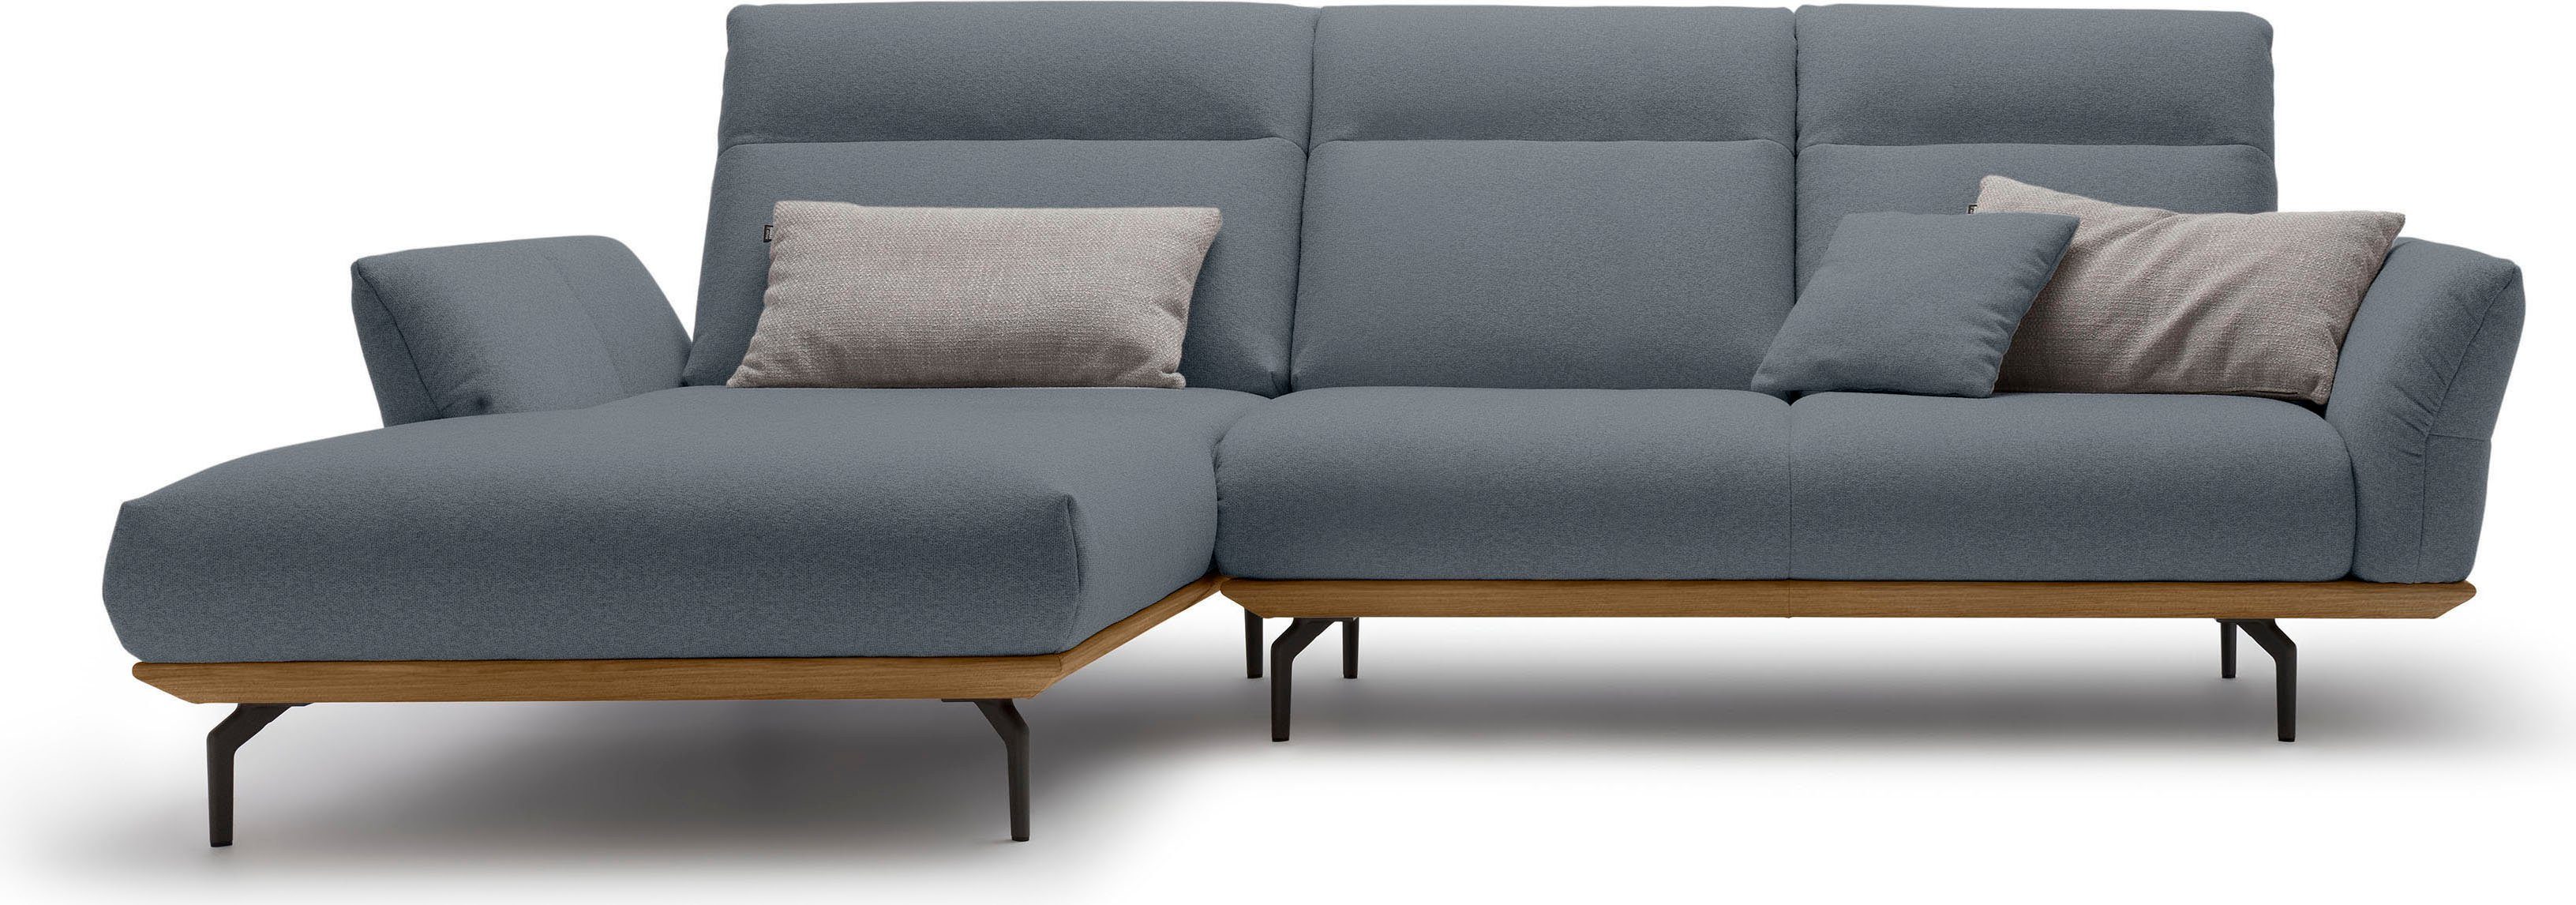 hülsta sofa Ecksofa hs.460, Sockel in Nussbaum, Winkelfüße in Umbragrau, Breite 298 cm | Ecksofas